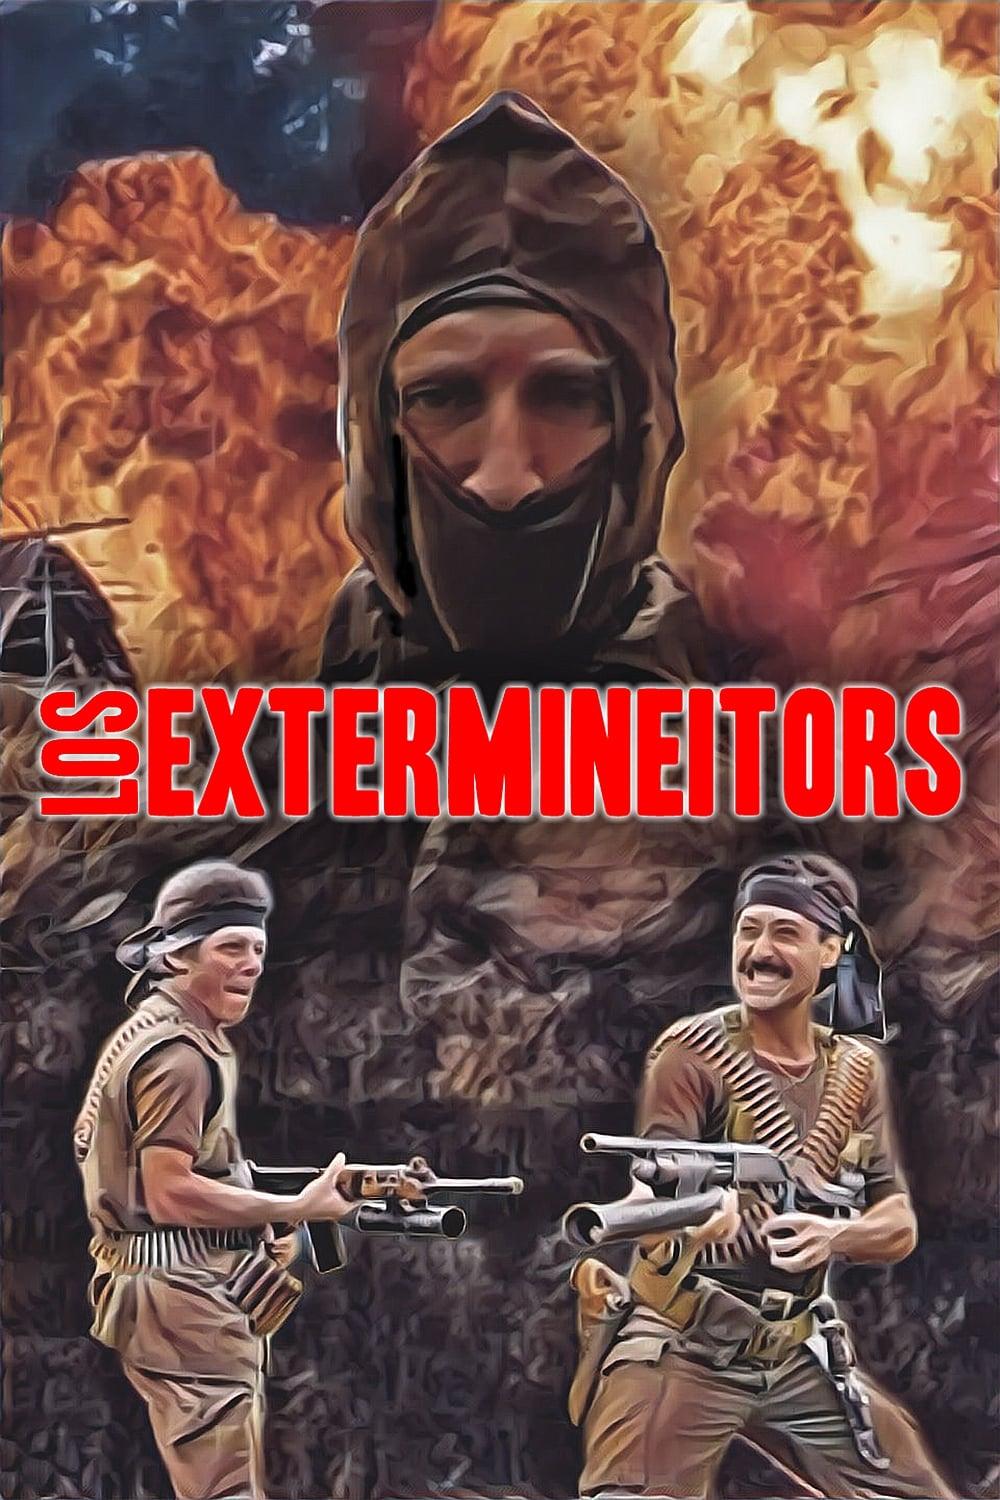 Los Extermineitors poster